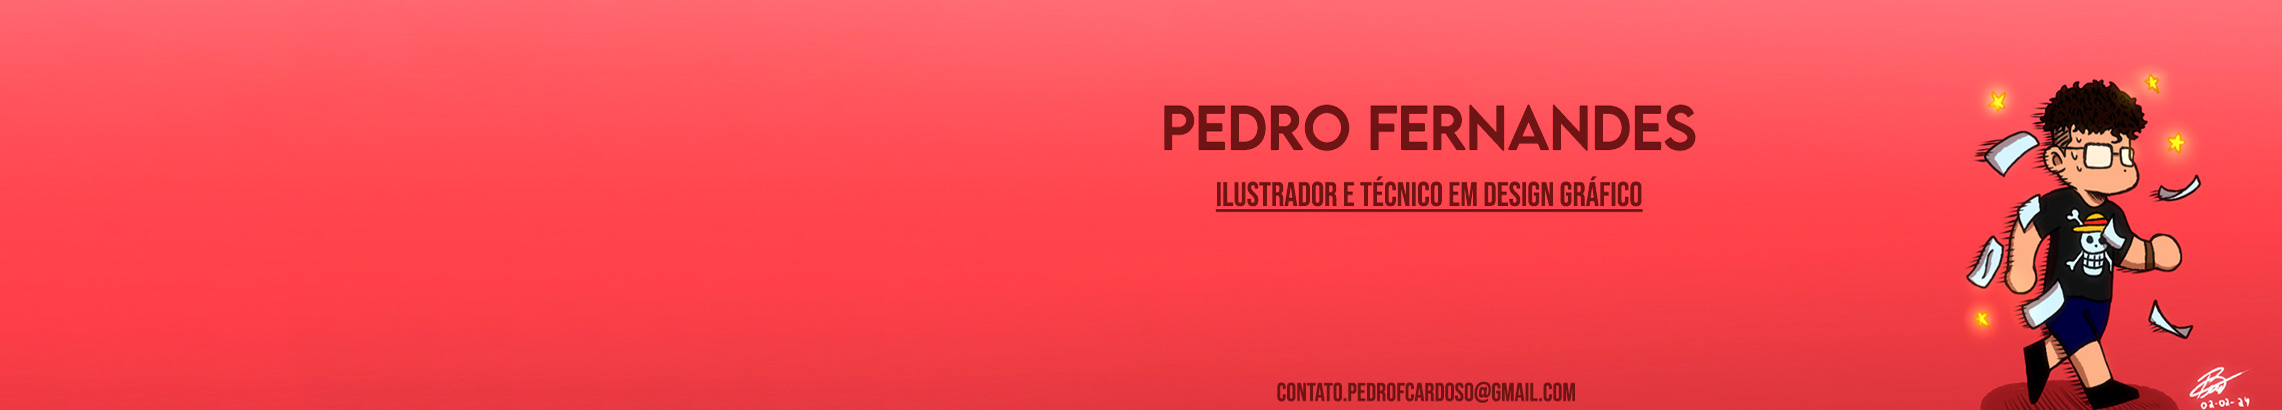 Pedro Fernandes のプロファイルバナー